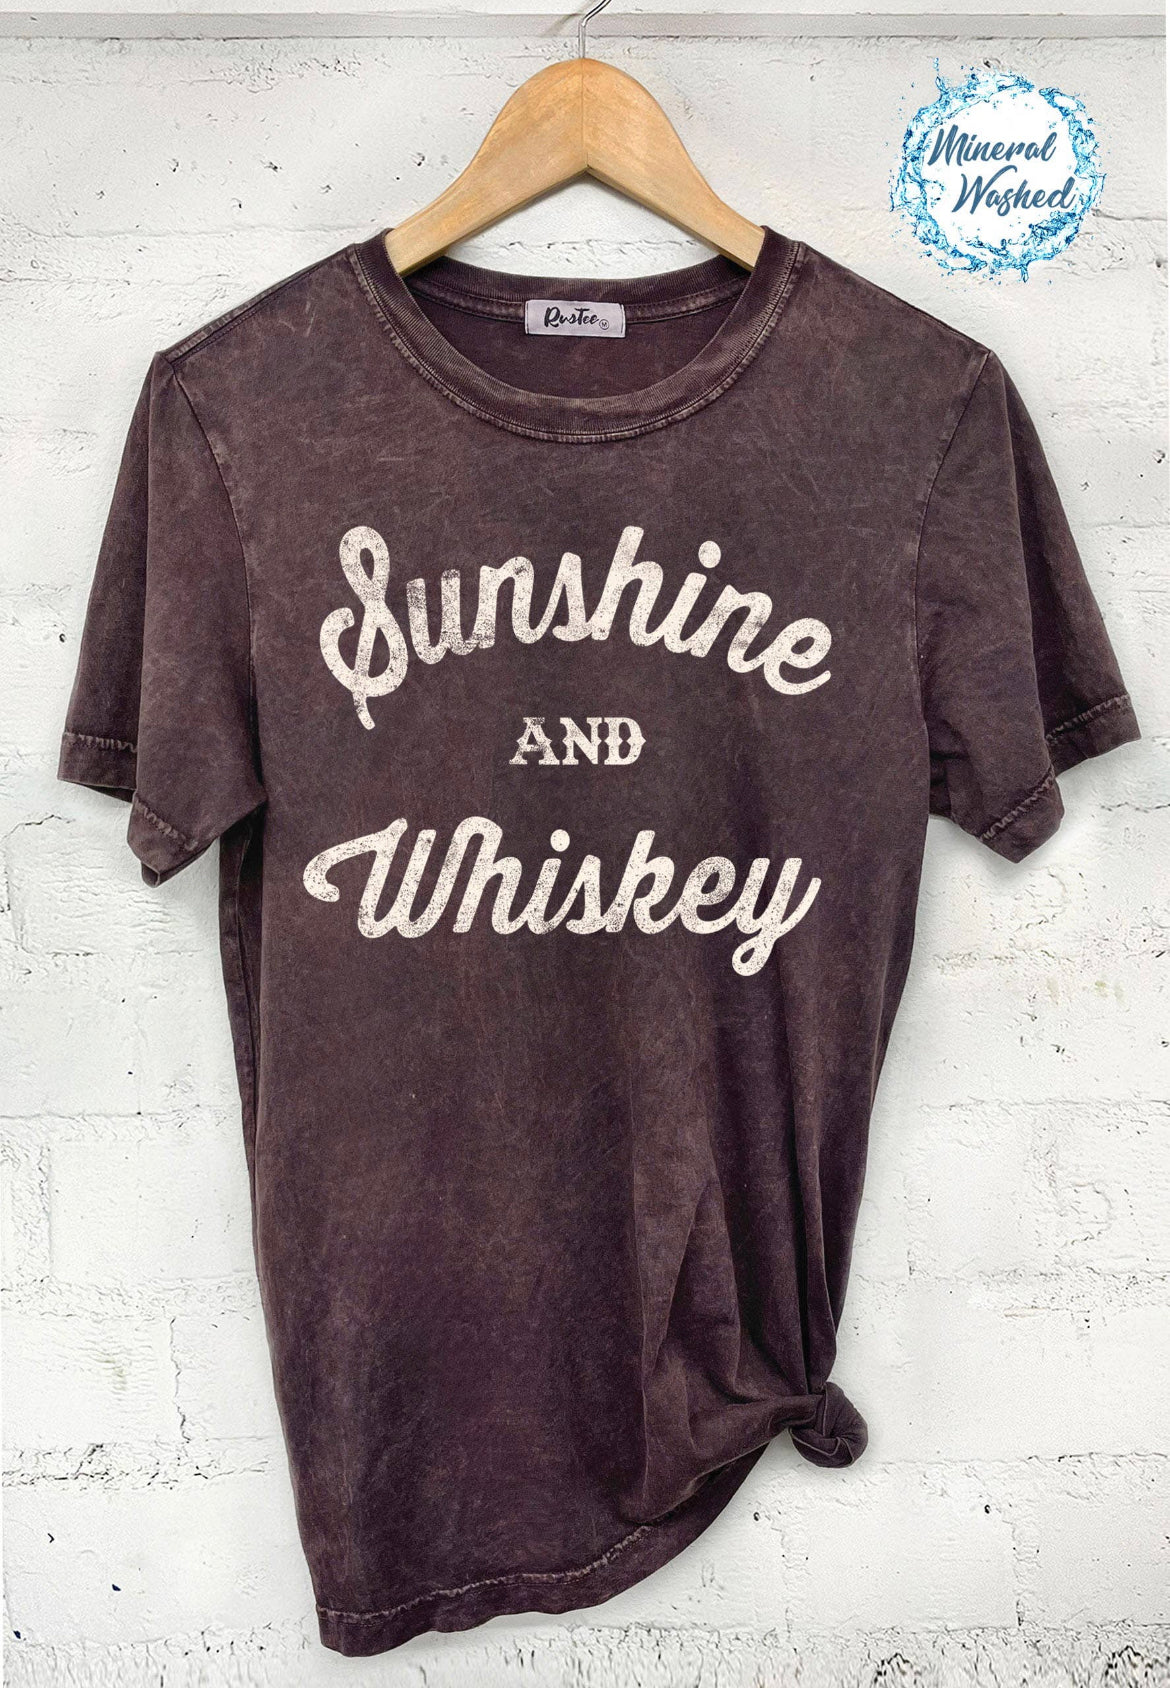 Sunshine & whiskey tee